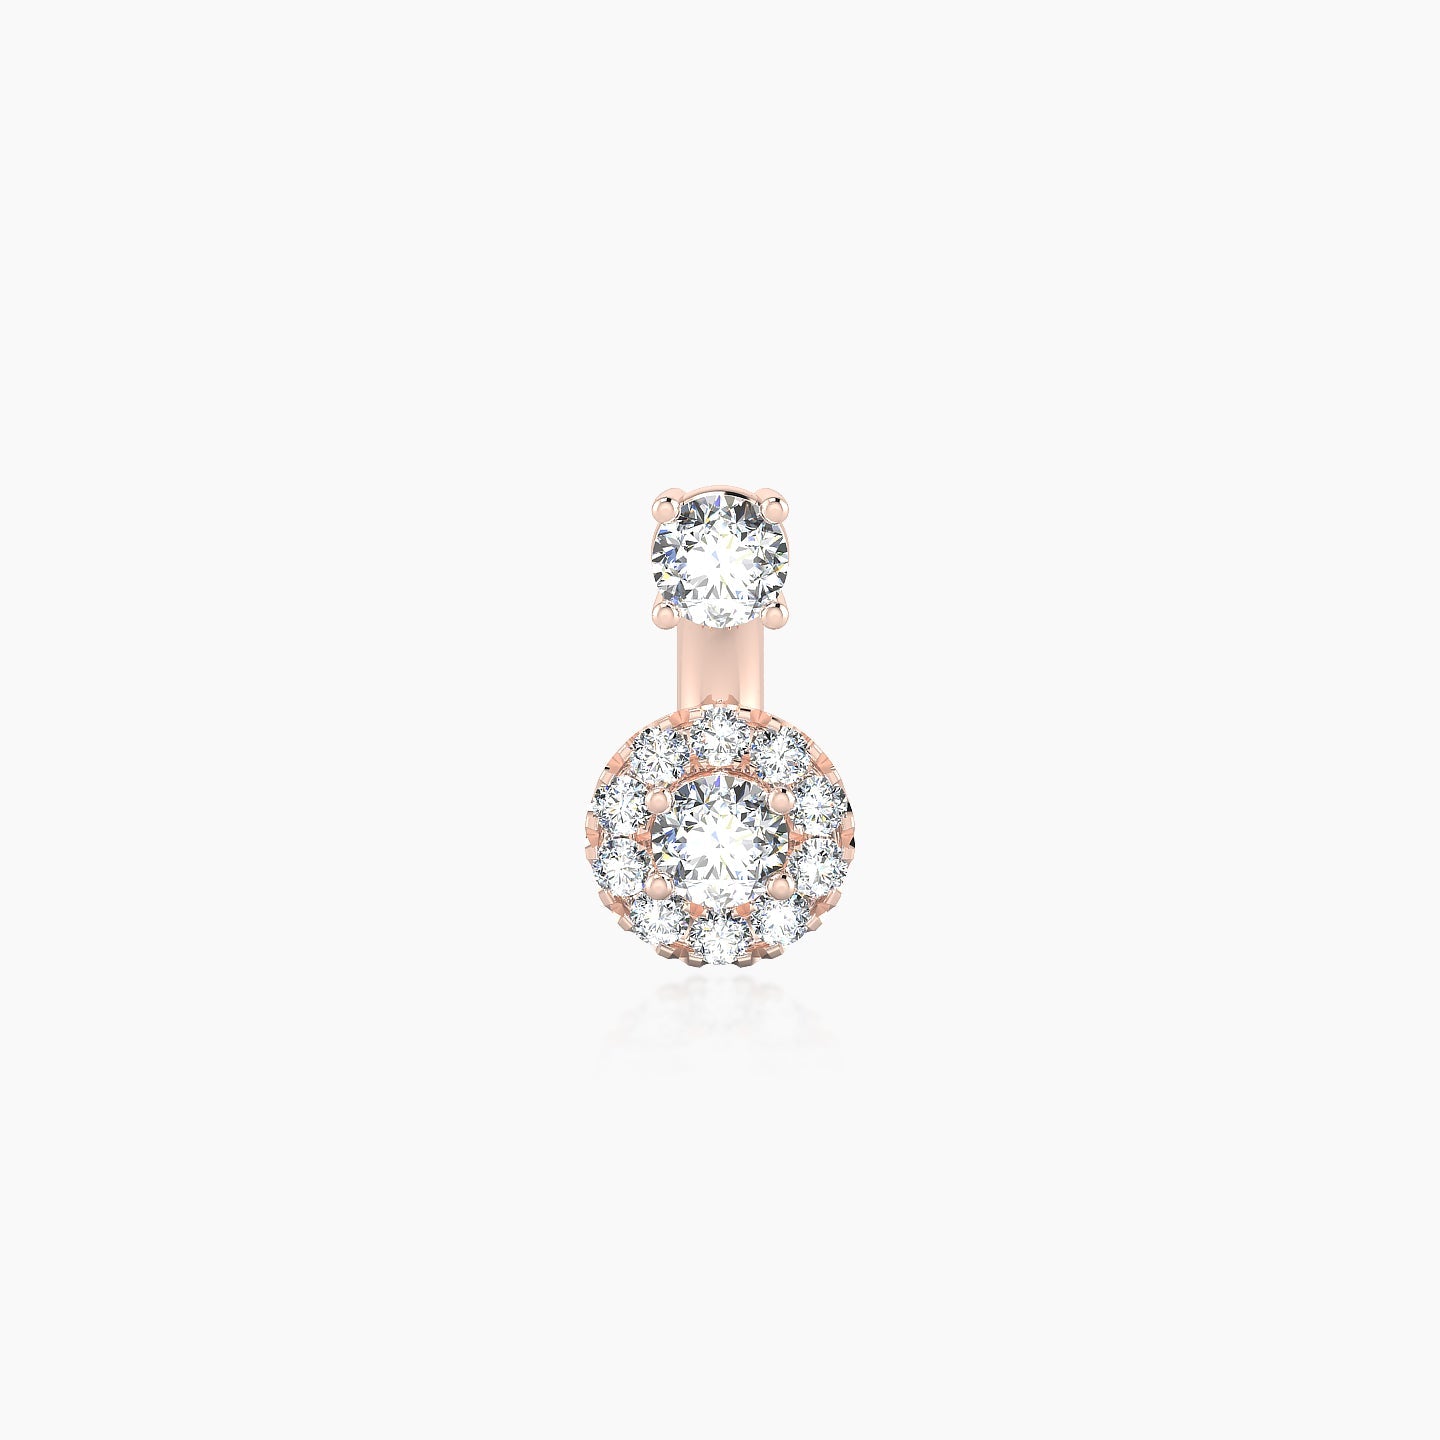 Eirene | 18k Rose Gold 6 mm 5.5 mm Halo Round Diamond Navel Piercing